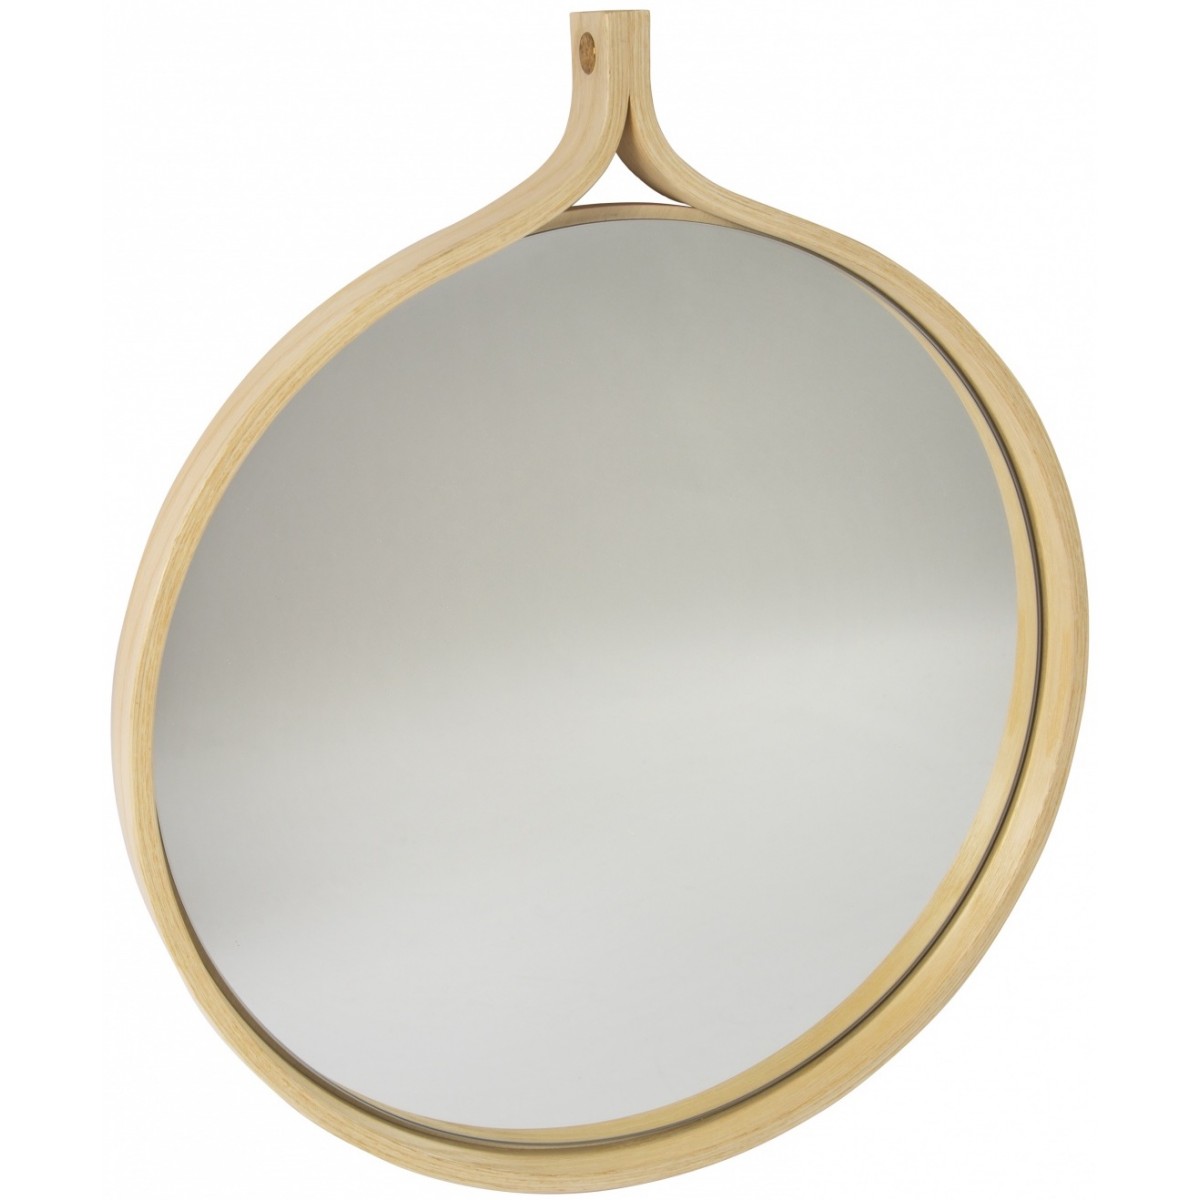 Comma mirror - natural ash - Ø52 cm